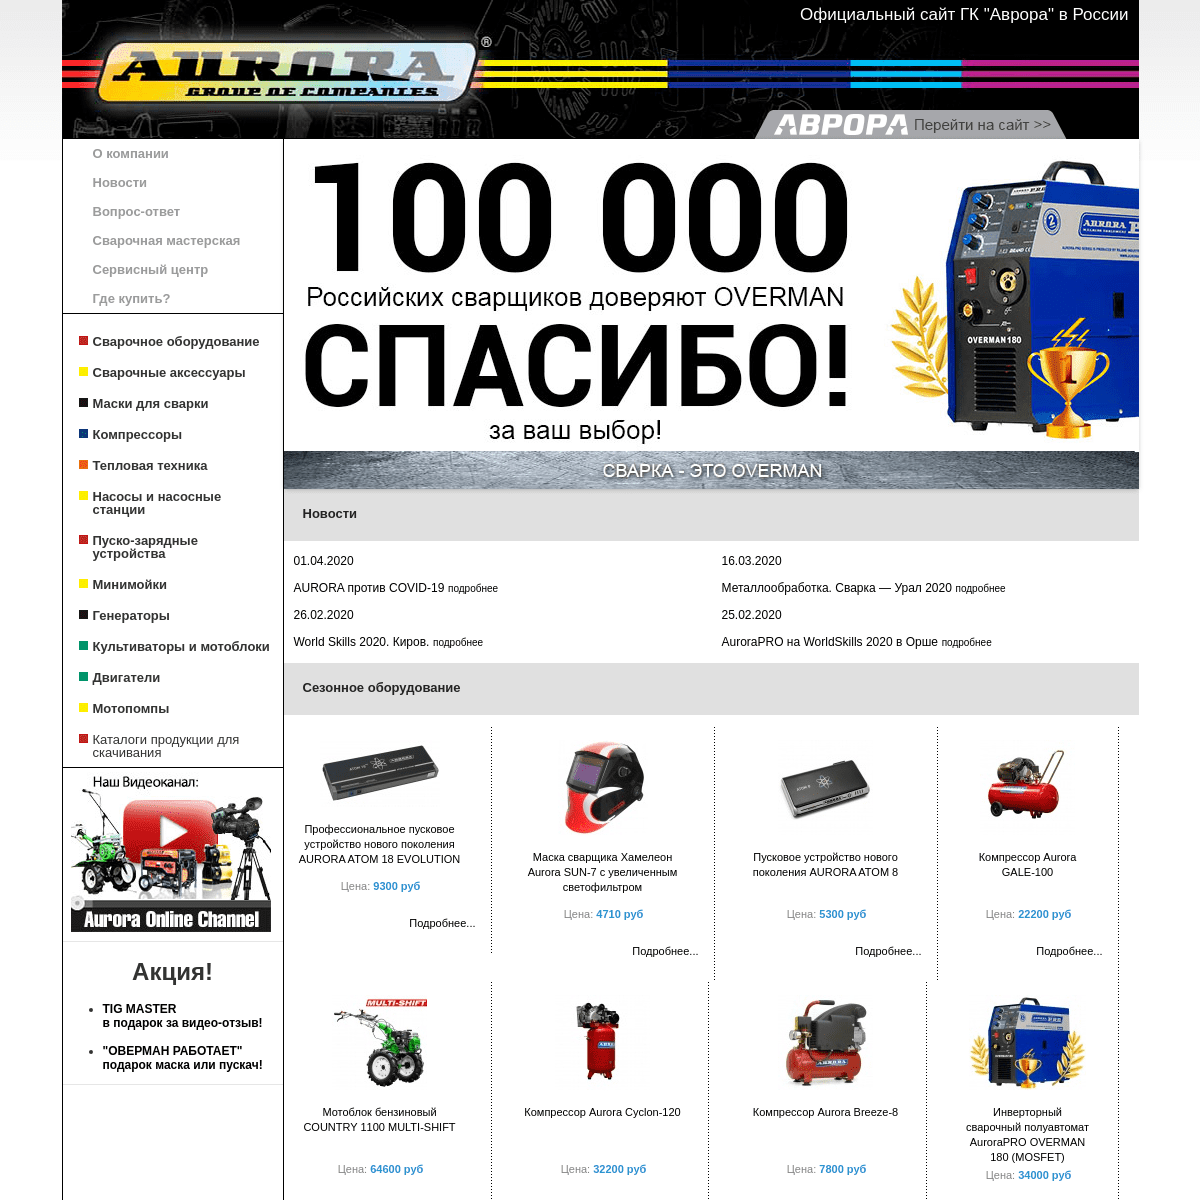 A complete backup of aurora-online.ru